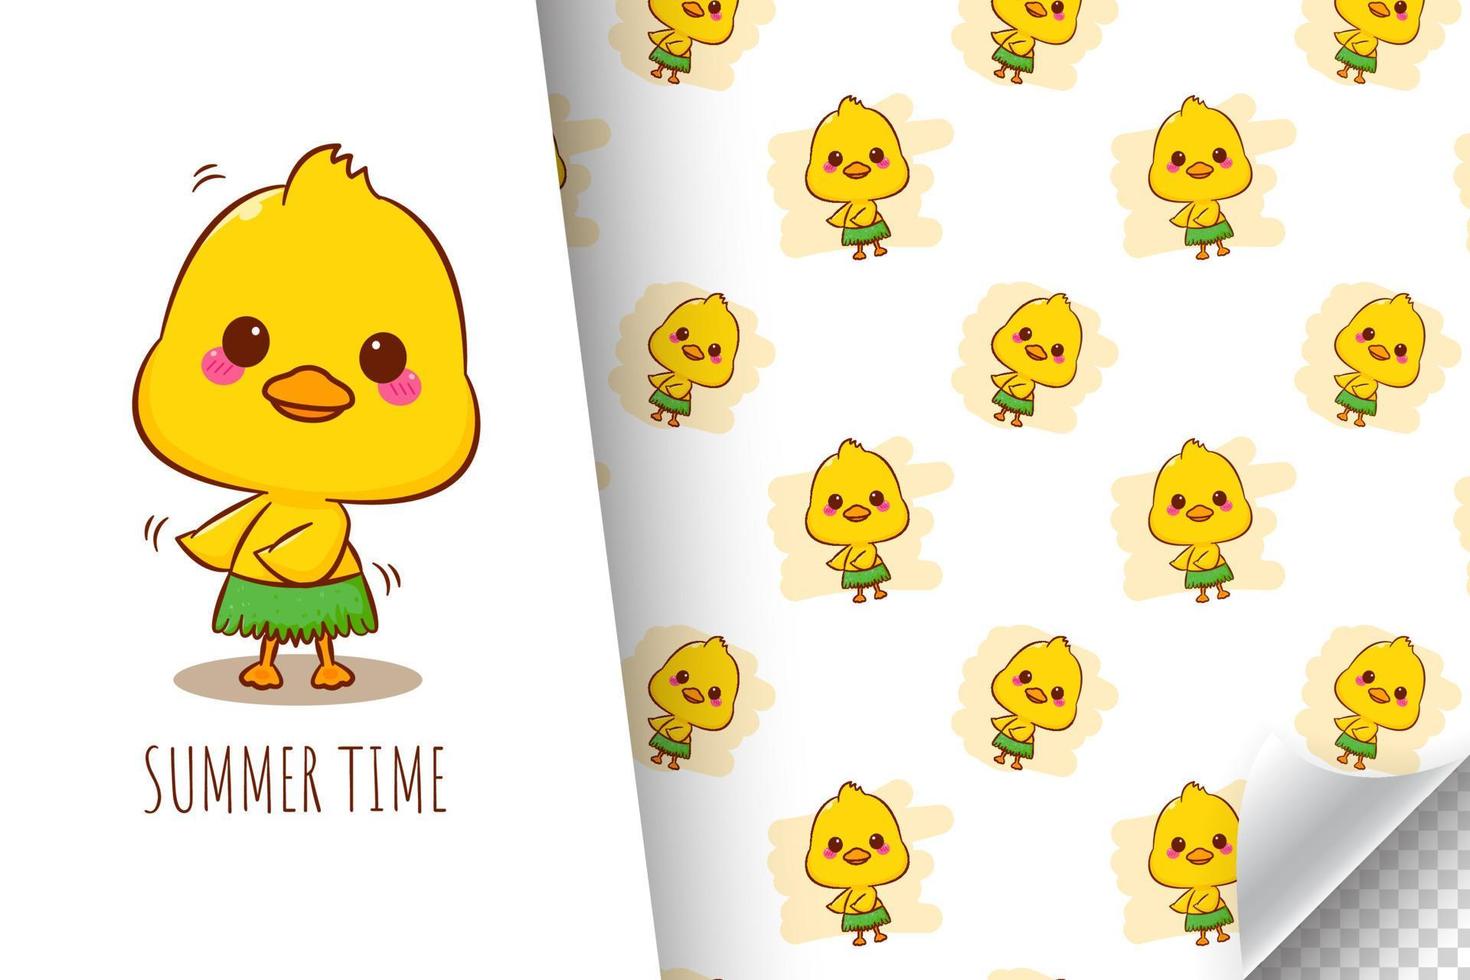 Cute duck dancing cartoon character seamless pattern illustration vector